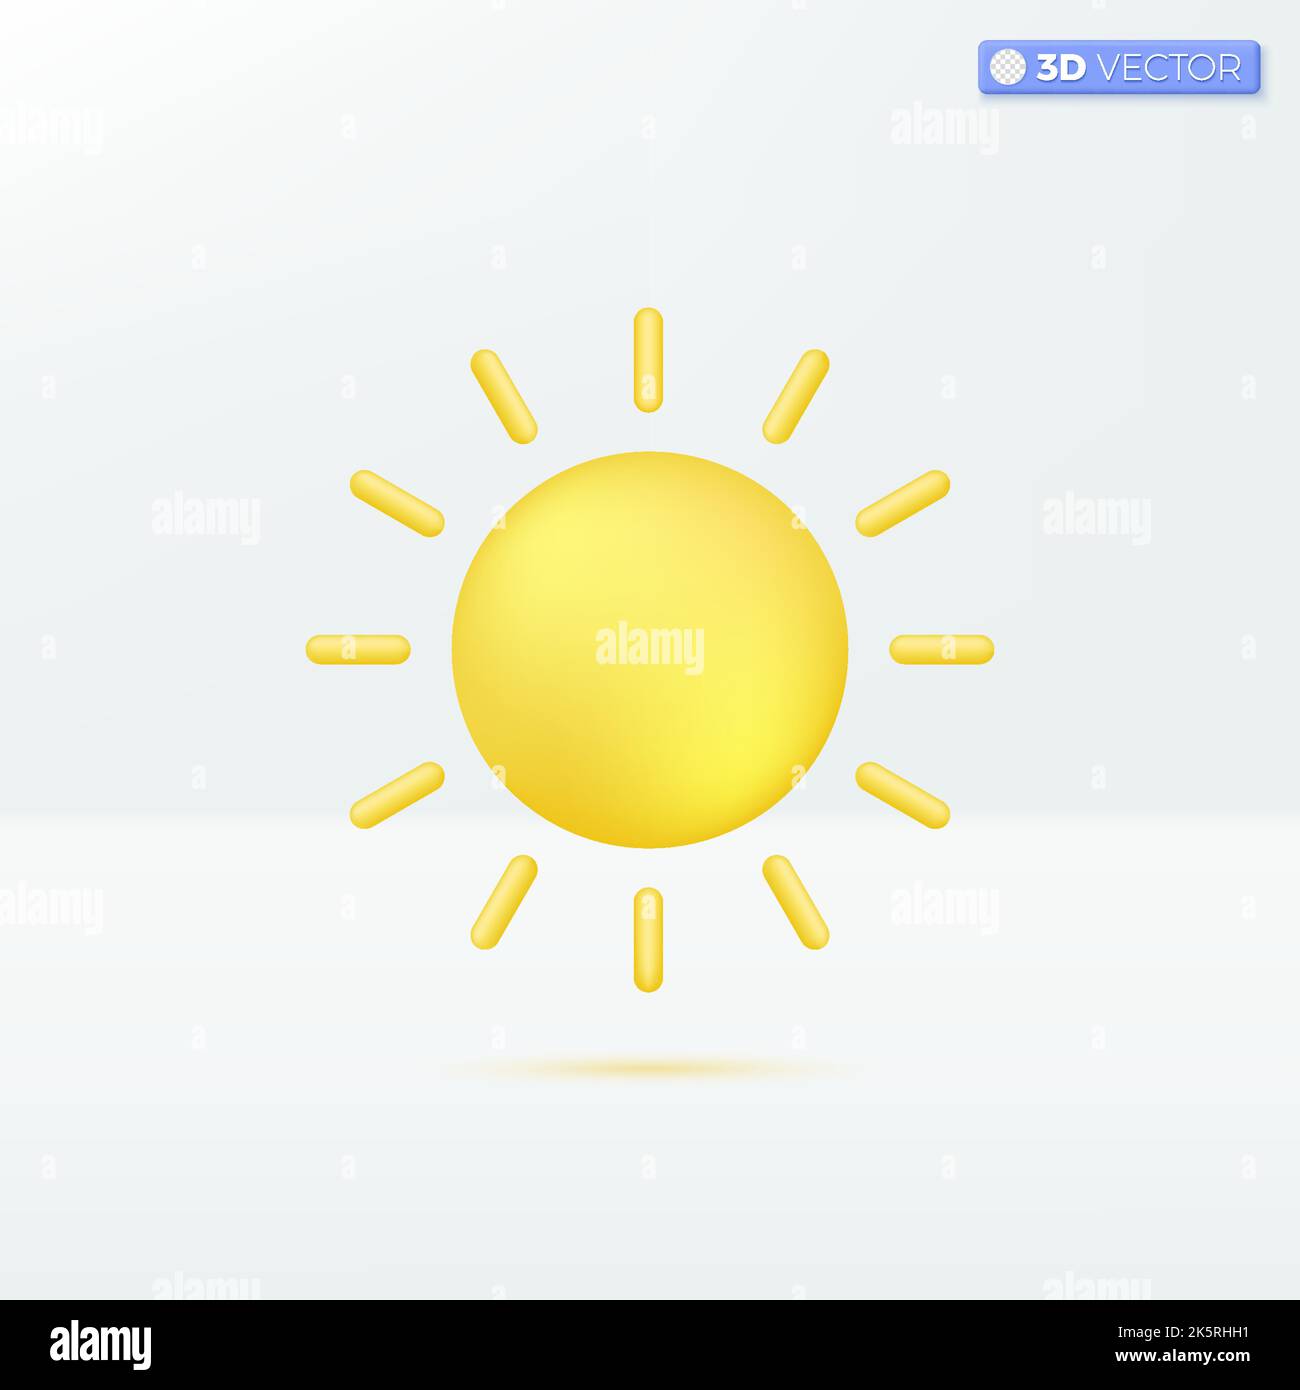 Gelbe Sonne Symbol Symbole. Design für mobile App und Website, Natur, Wetter, heißen Sommer-Konzept. 3D Vektor isoliertes Illustrationsdesign. Cartoon-Paste Stock Vektor